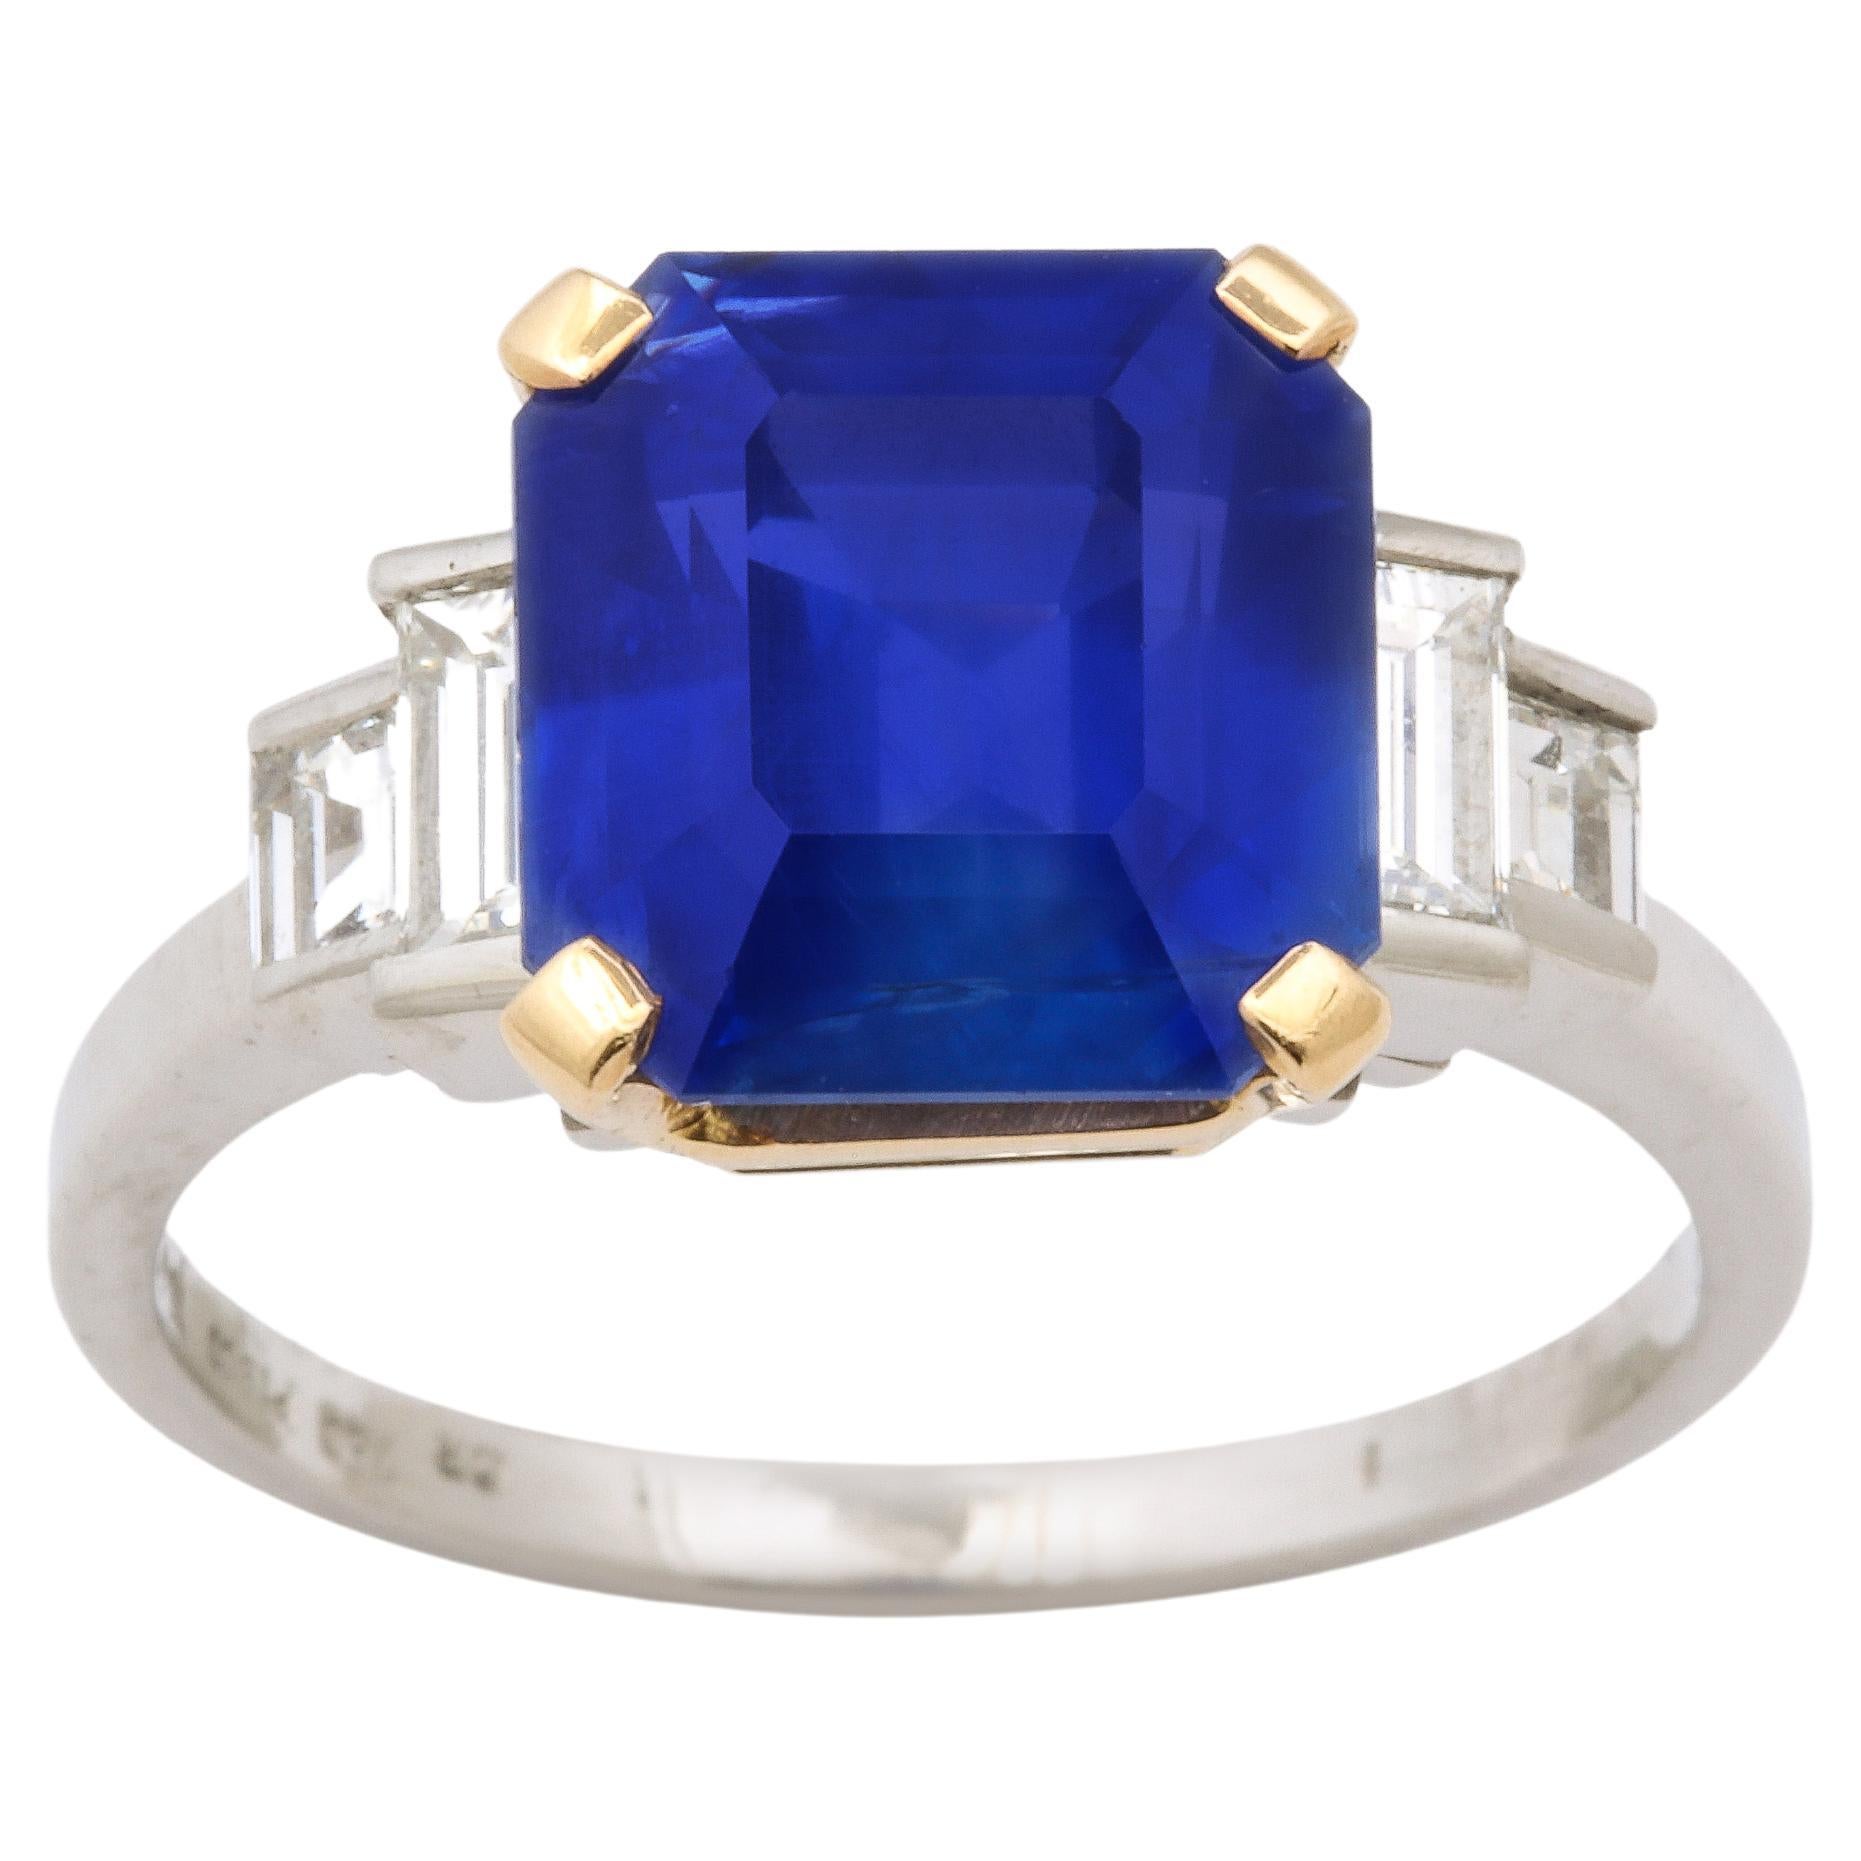 Bulgari Emerald-Cut Ceylon Sapphire and Diamond Ring